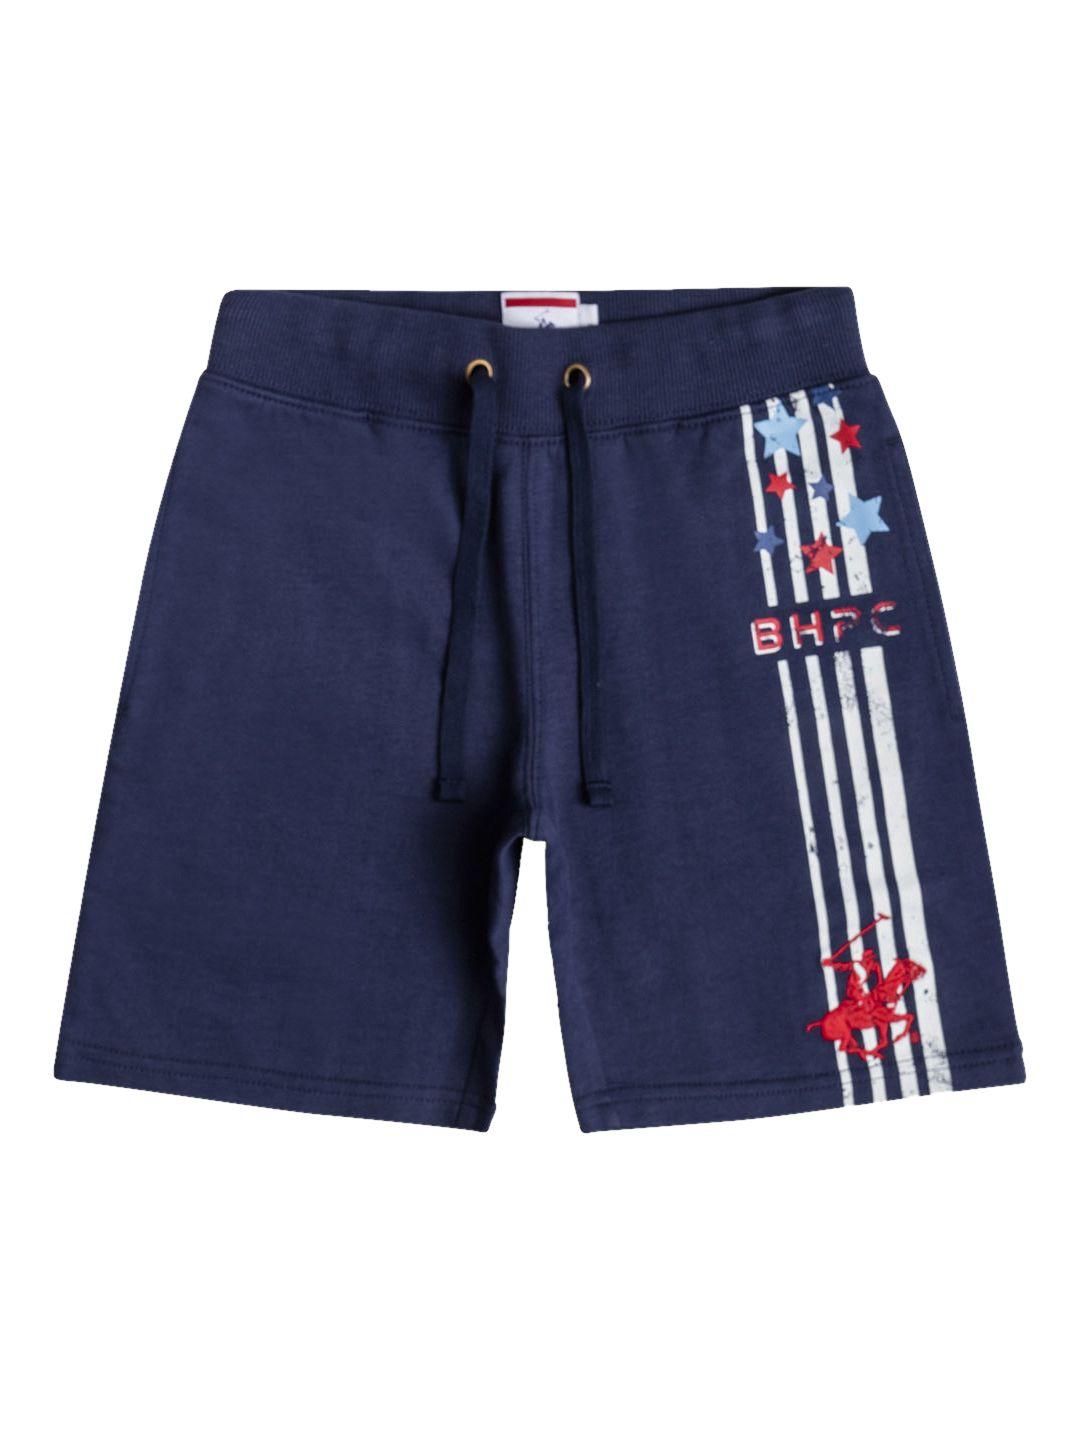 beverly-hills-polo-club-boys-navy-blue-printed-shorts